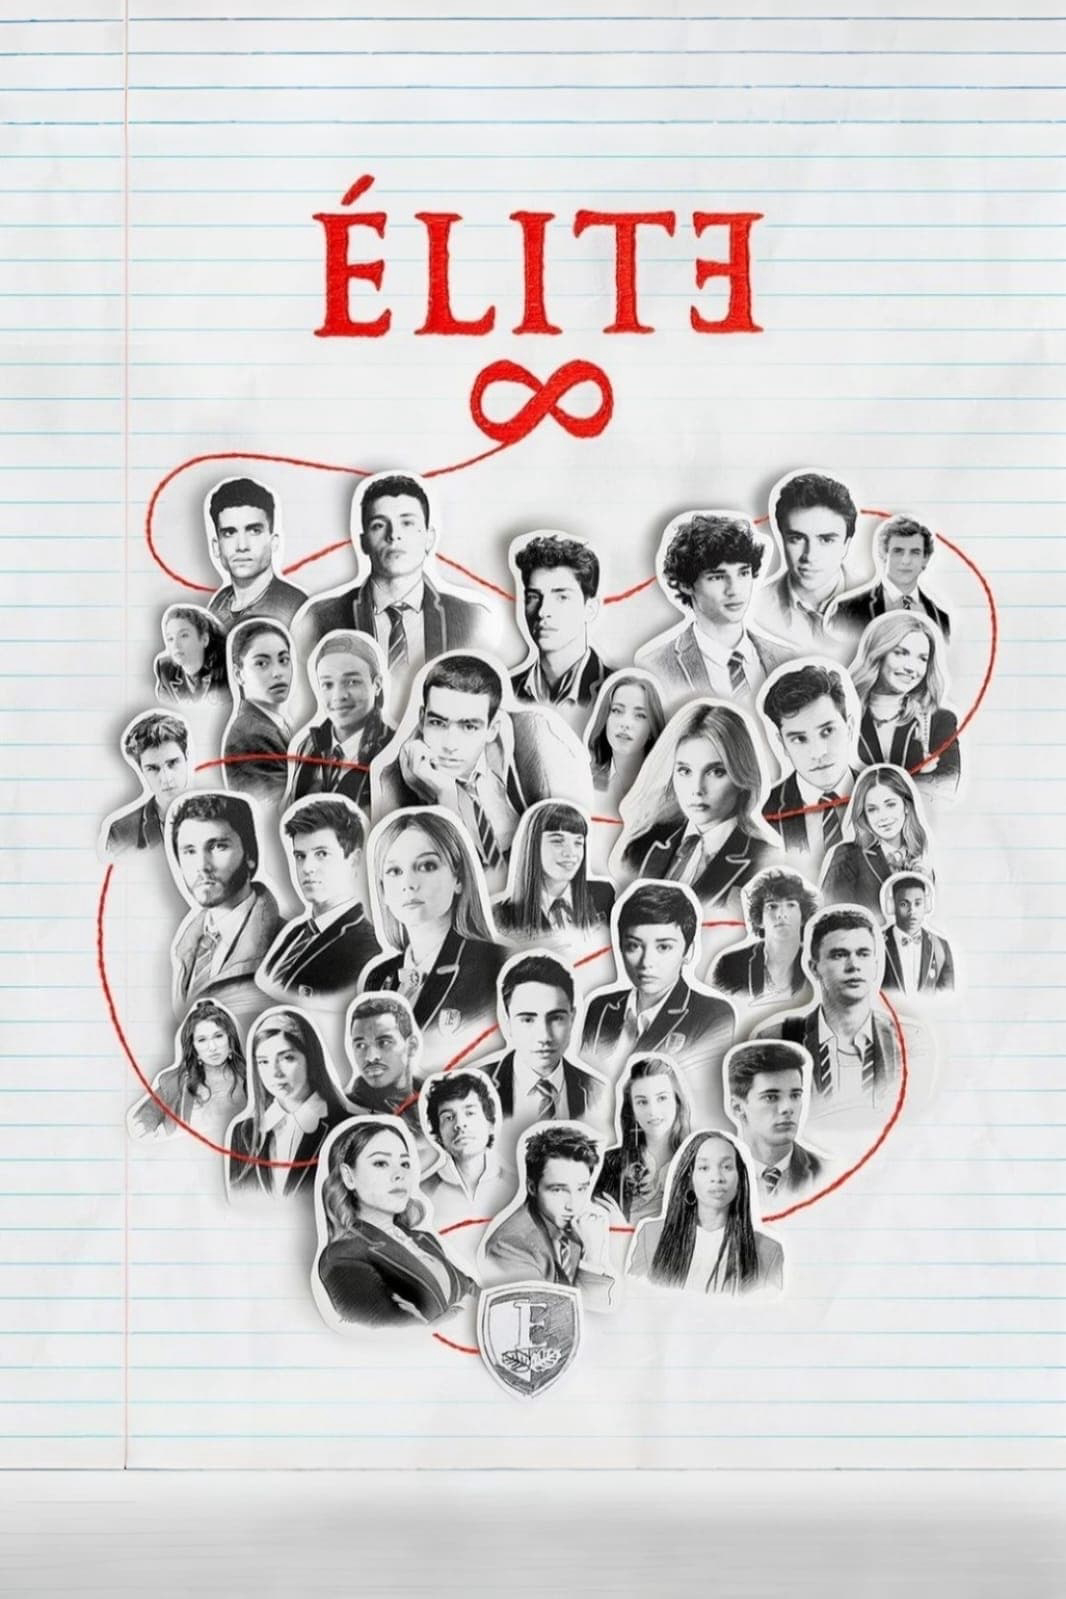 Ưu Tú (Phần 8) - Elite (Season 8)